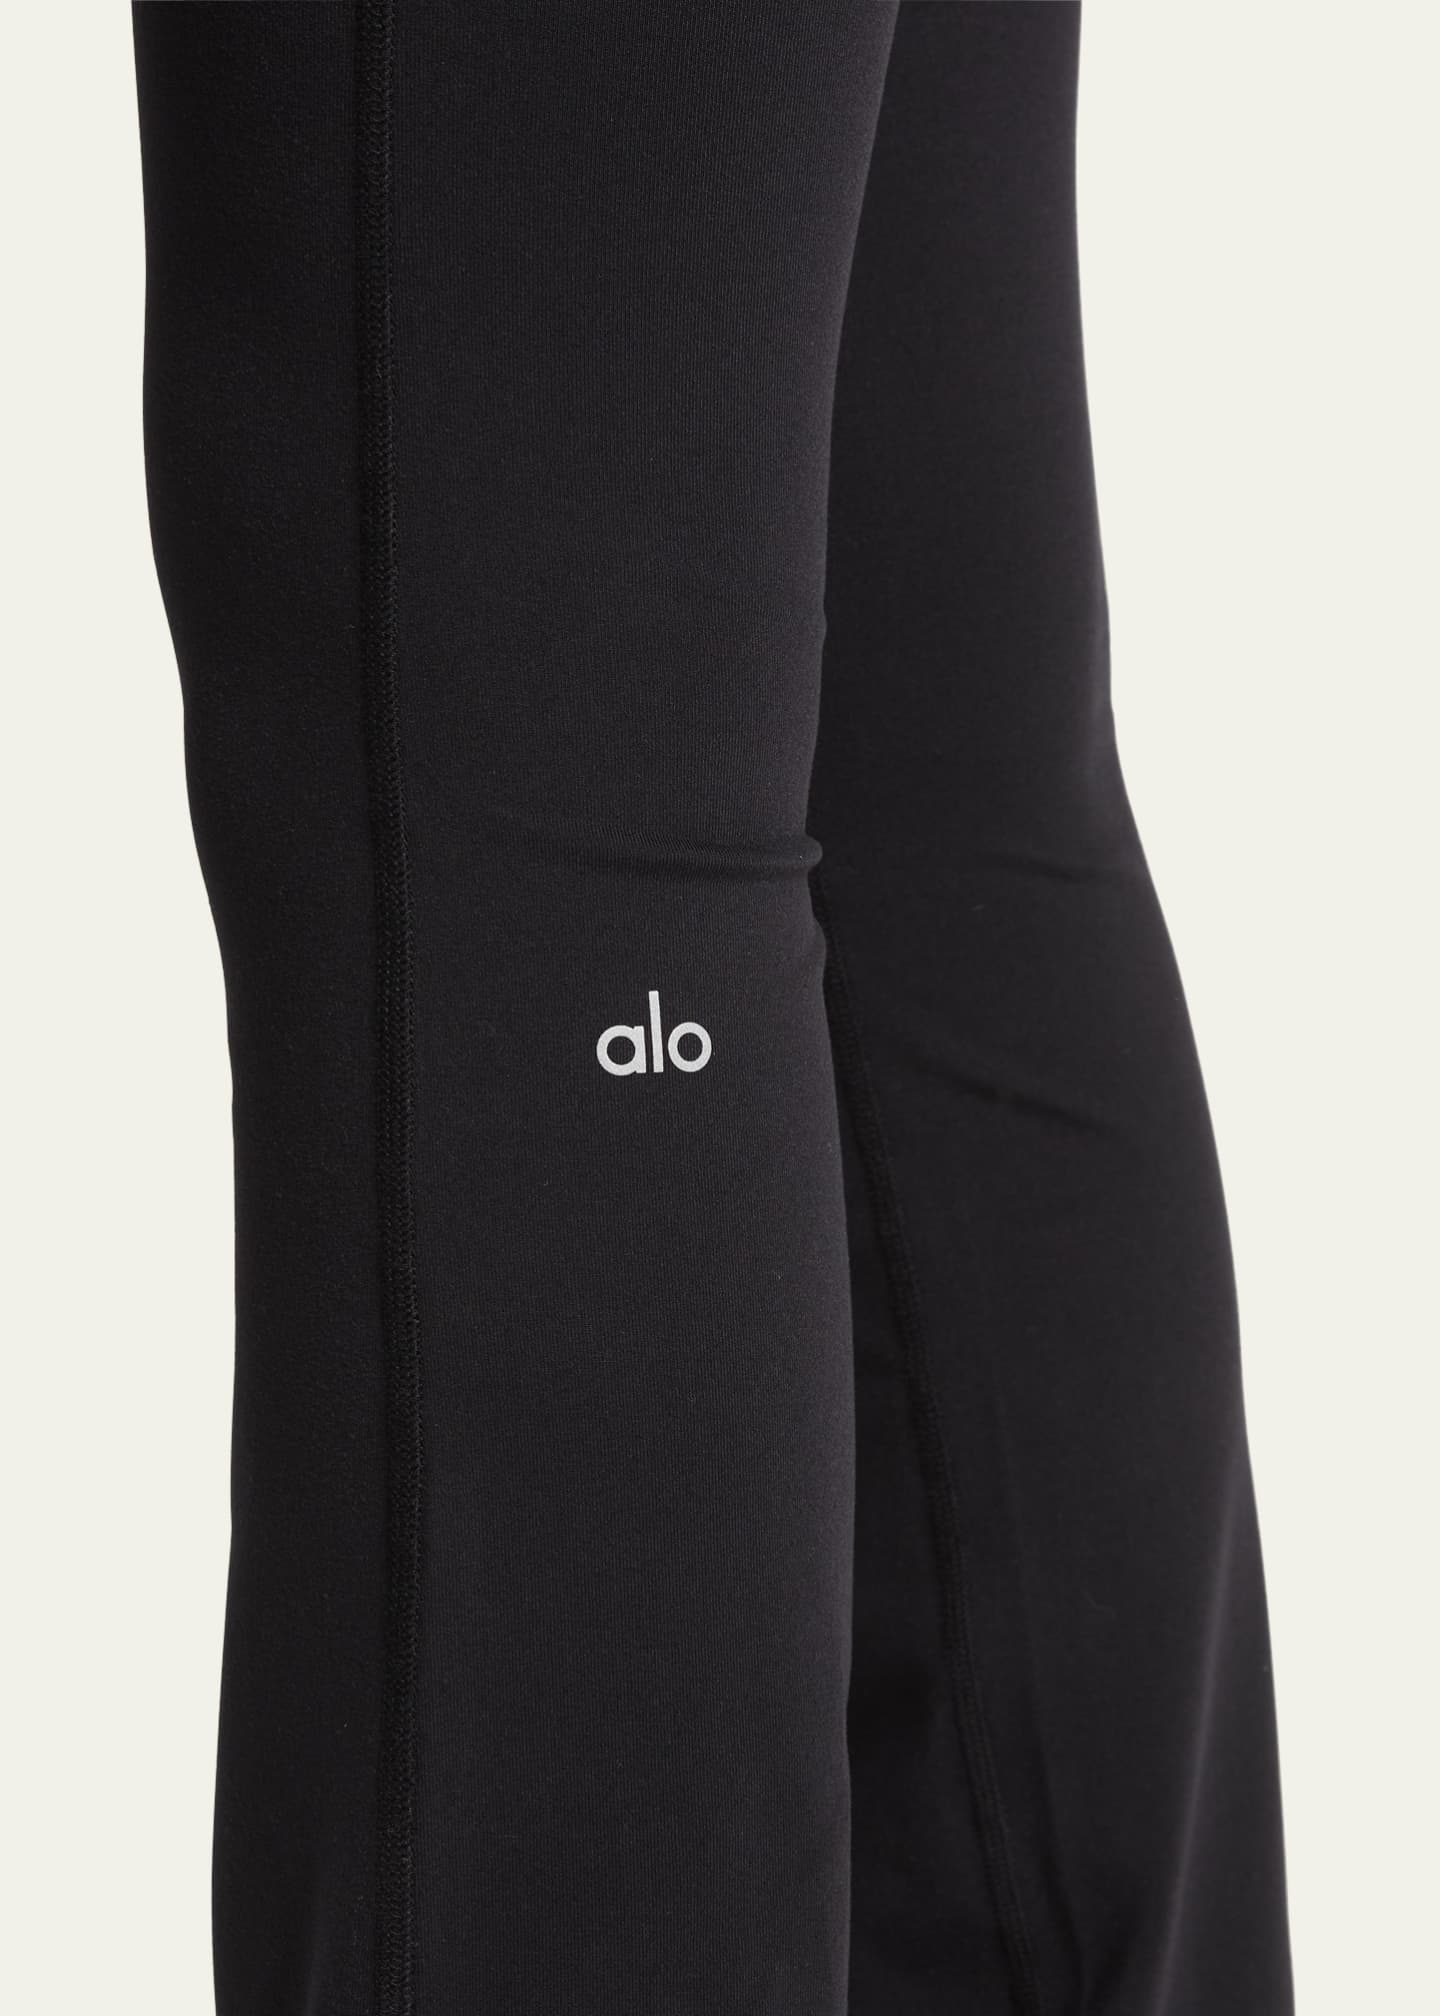 Alo Yoga airbrush high-waist bootcut leggings Black - $50 (54% Off Retail)  - From Jenna